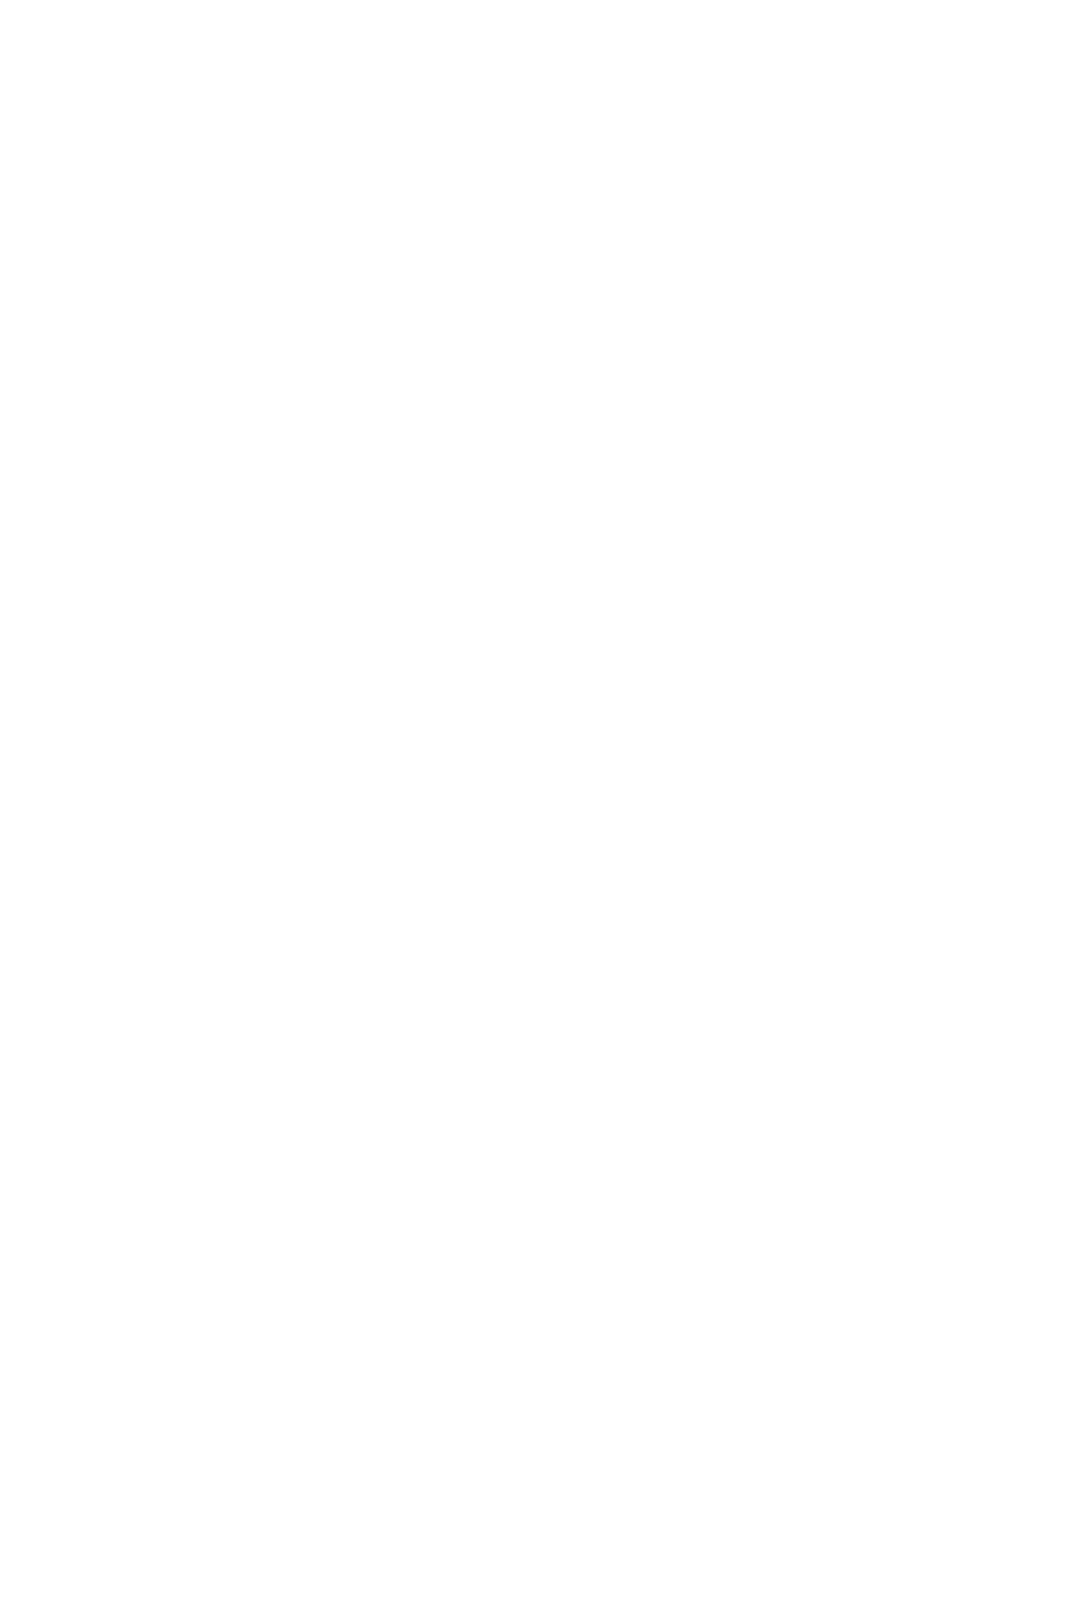 Is Yatirim Menkul Degerler Anonim Sirketi logo for dark backgrounds (transparent PNG)